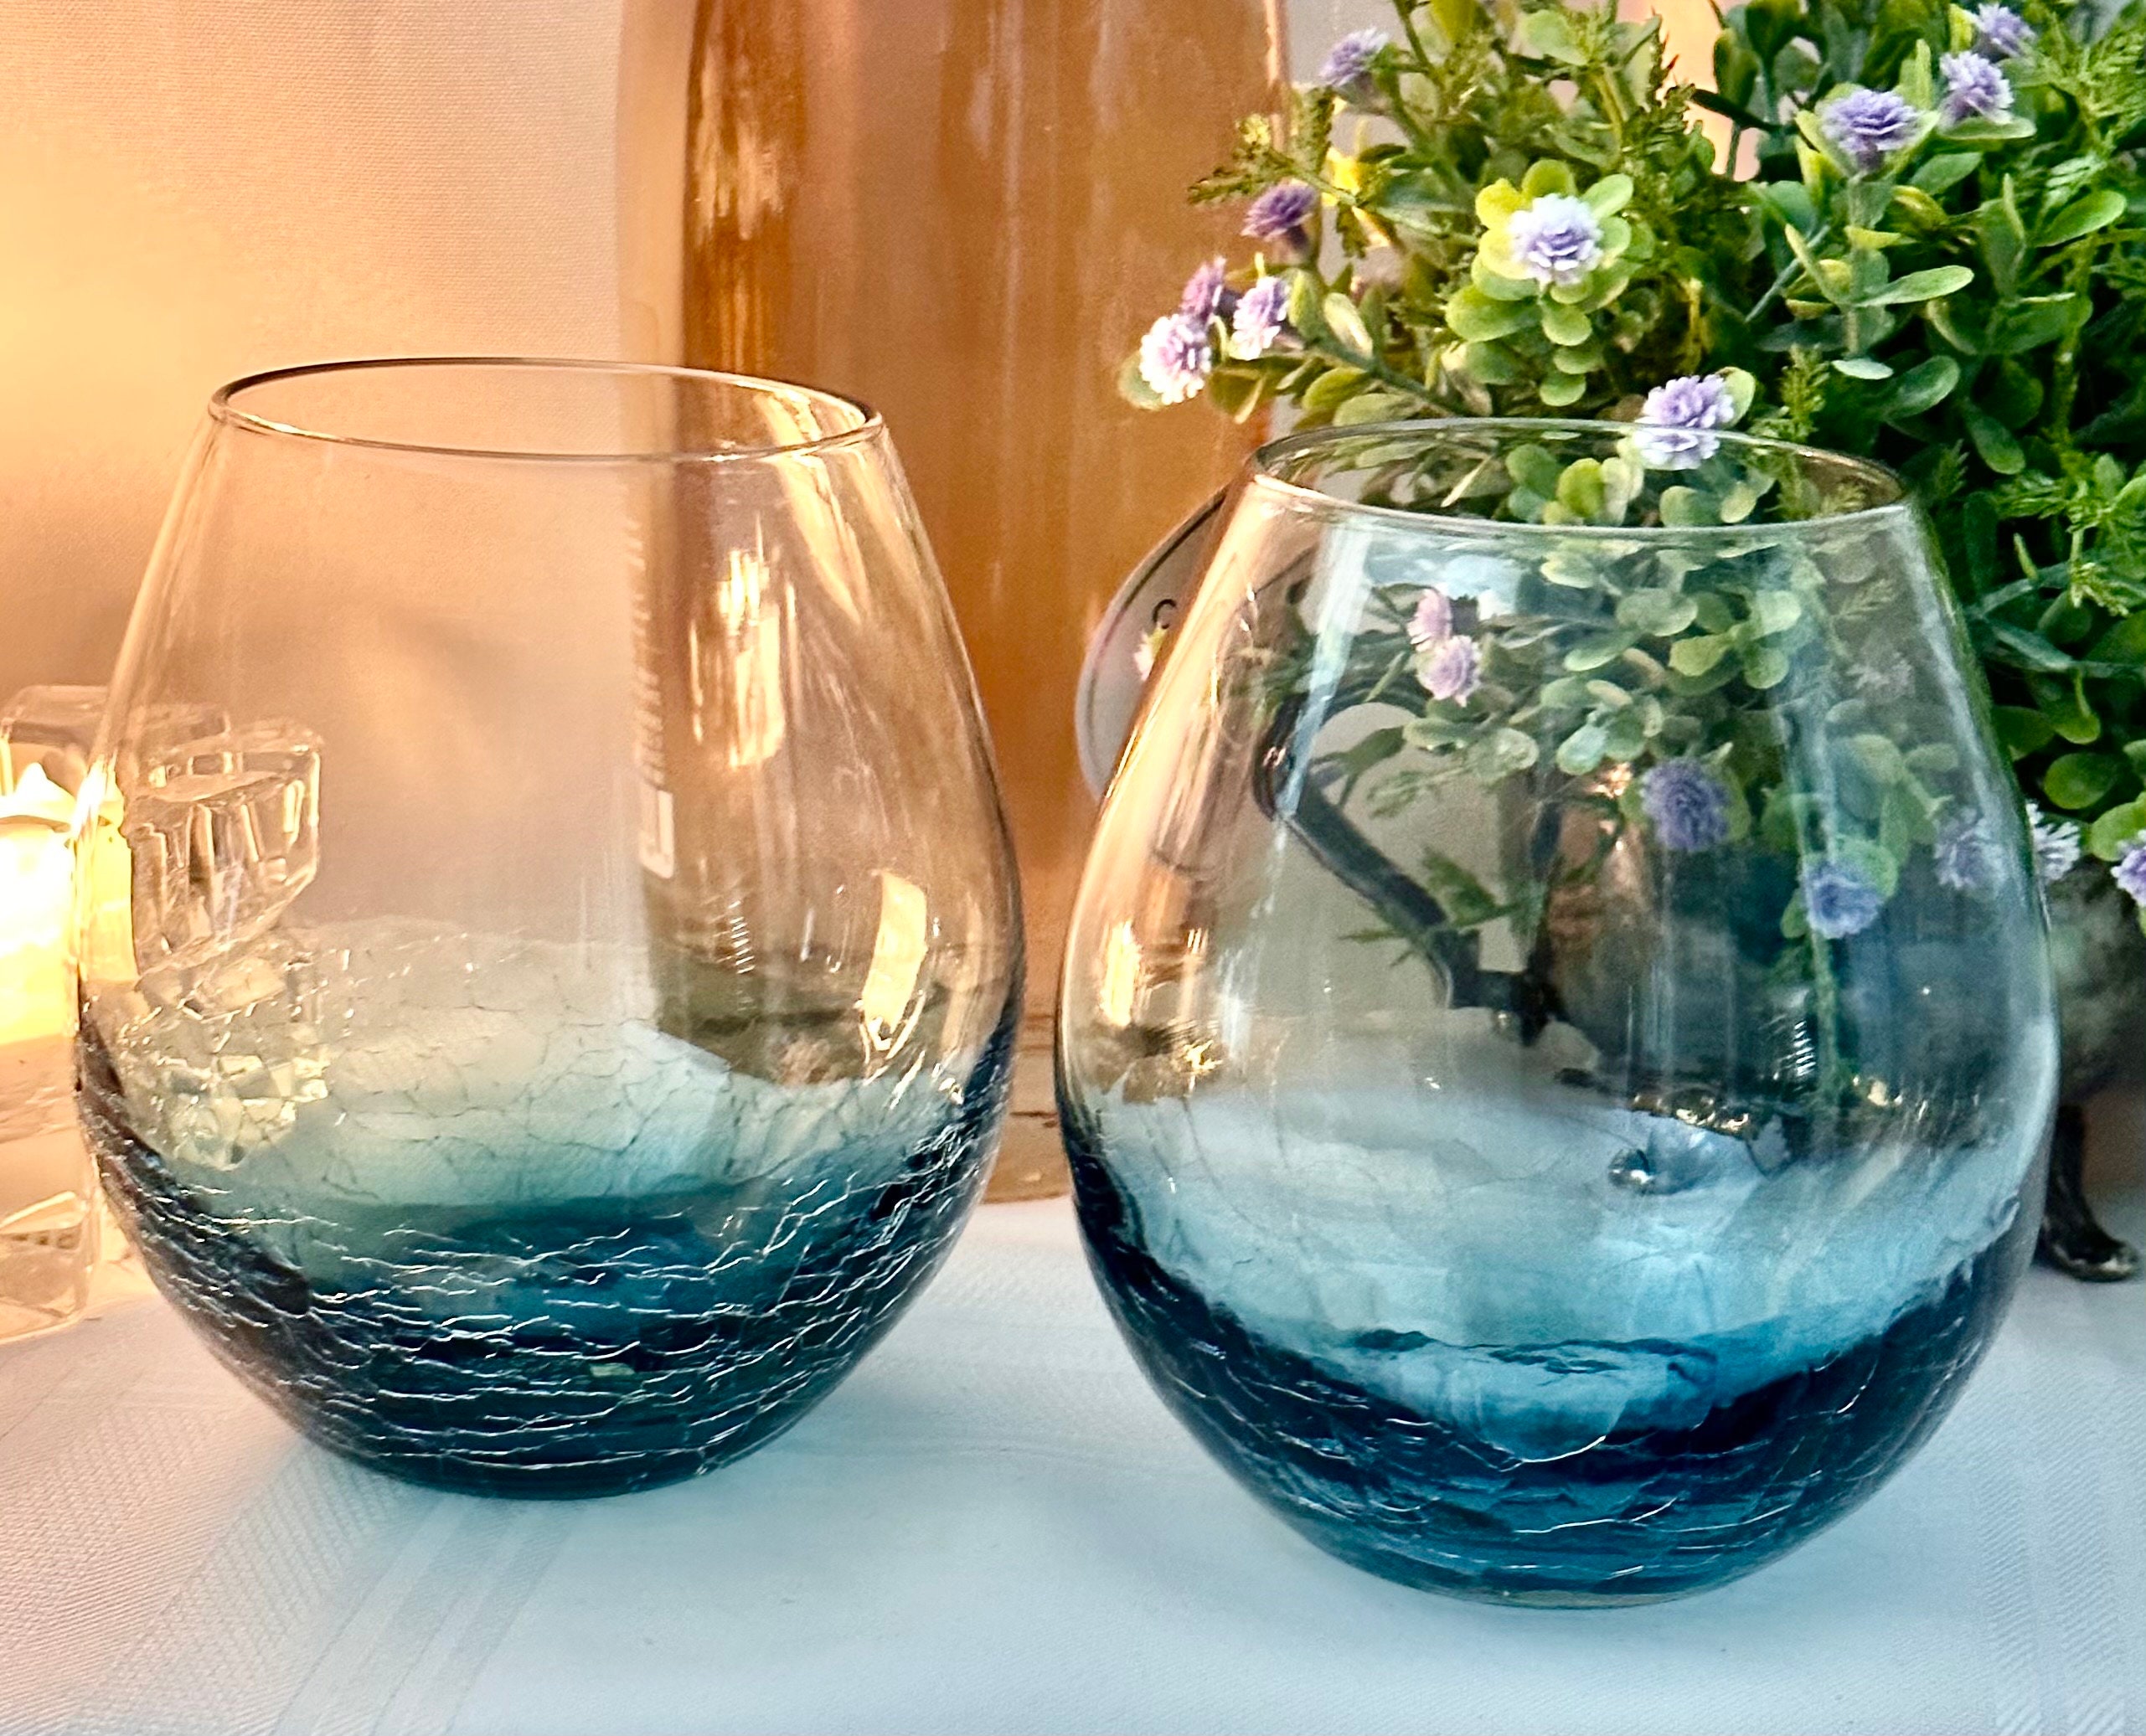 Pier 1 Crackle Stemless Wine Glasses / Pier 1 Teal Colored Wine Glass /  Vintage Pier 1 Crackle Barware / 16 OZ Teal Stemless Wine Glasses 